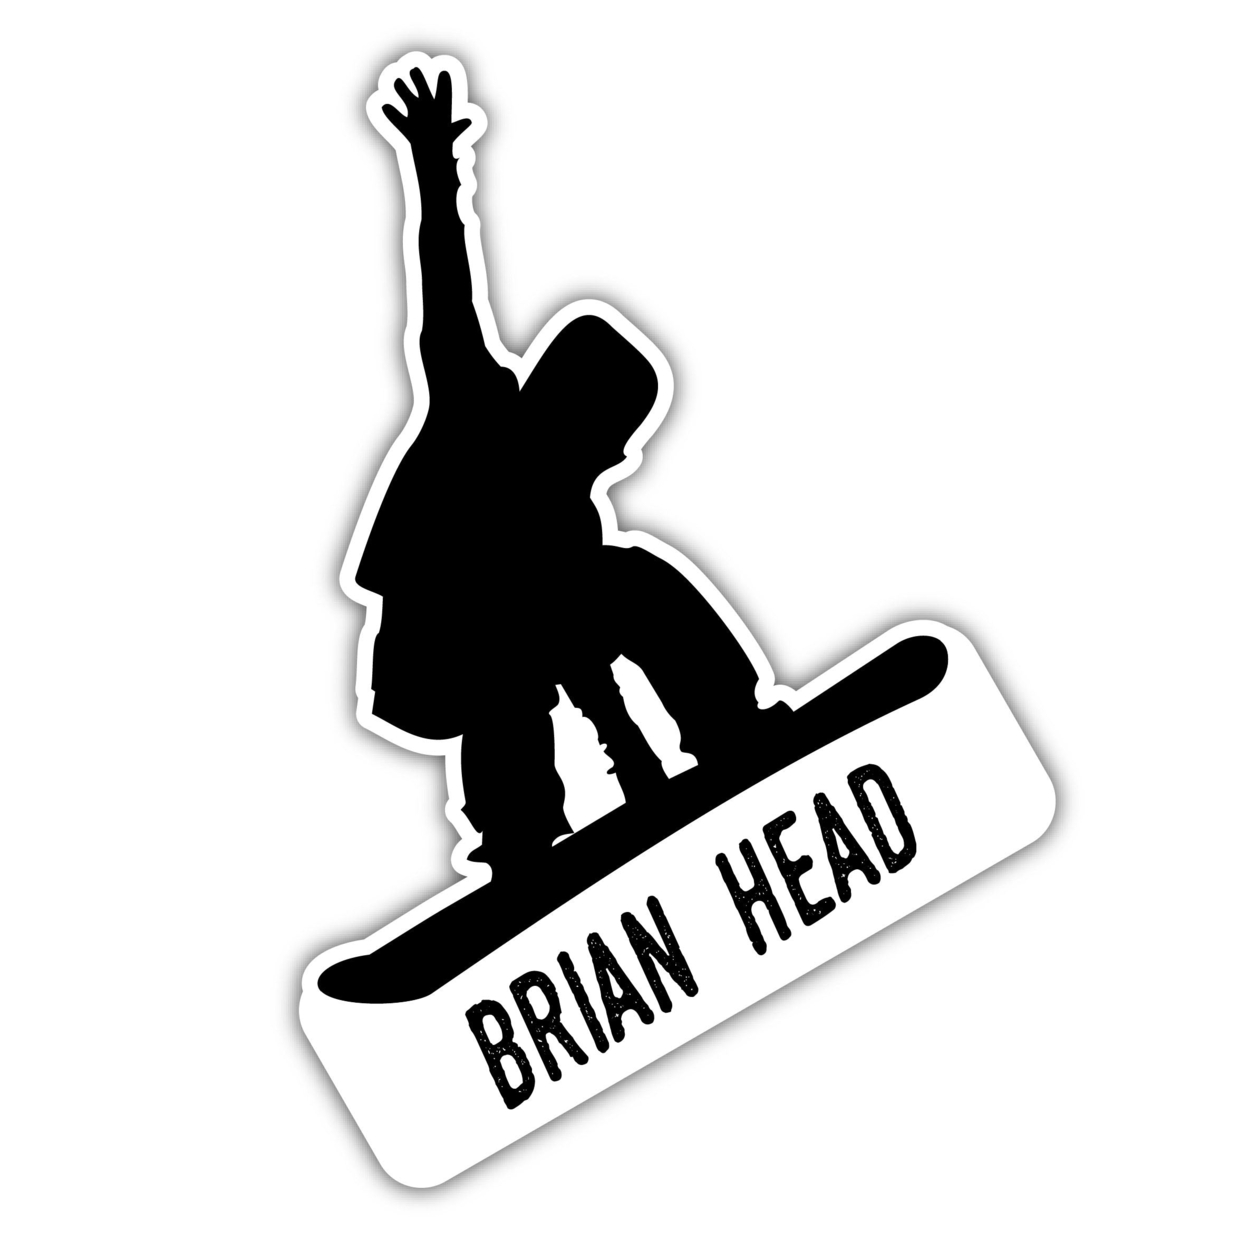 Brian Head Utah Ski Adventures Souvenir 4 Inch Vinyl Decal Sticker Mountain Design